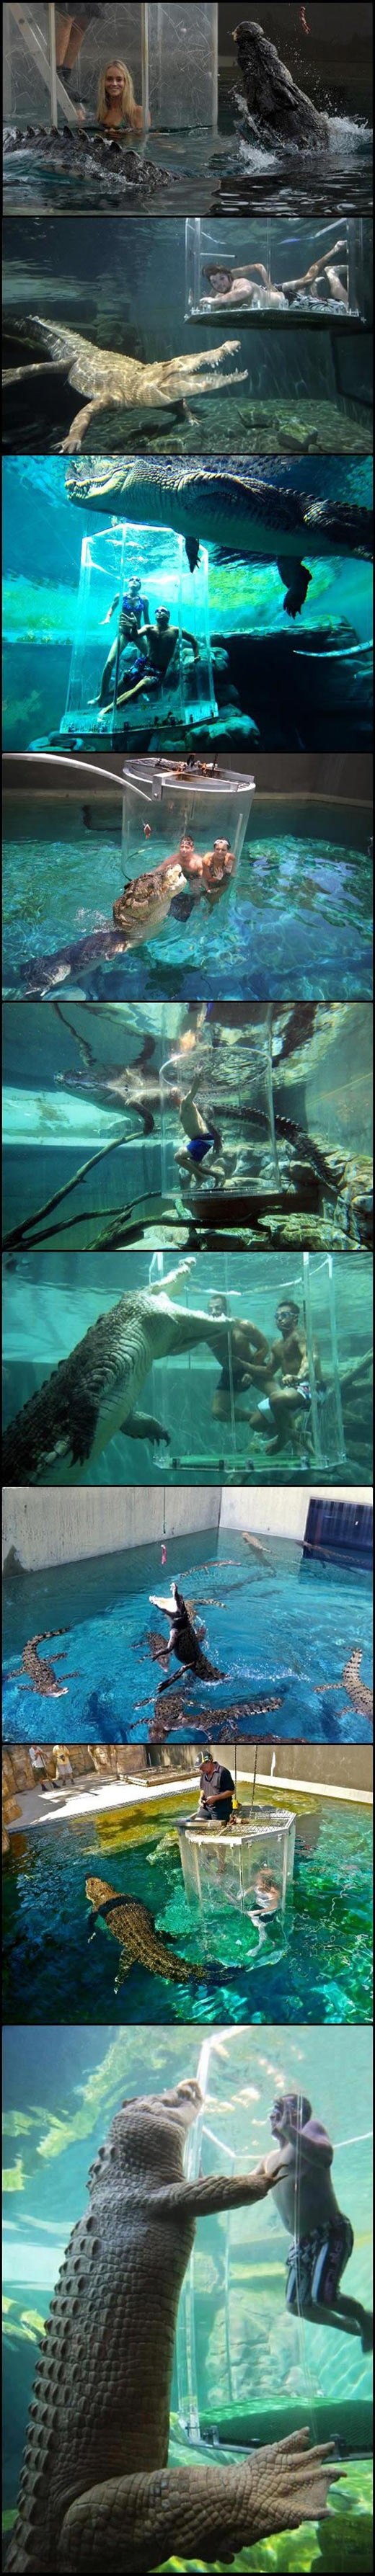 Swimming with alligators.